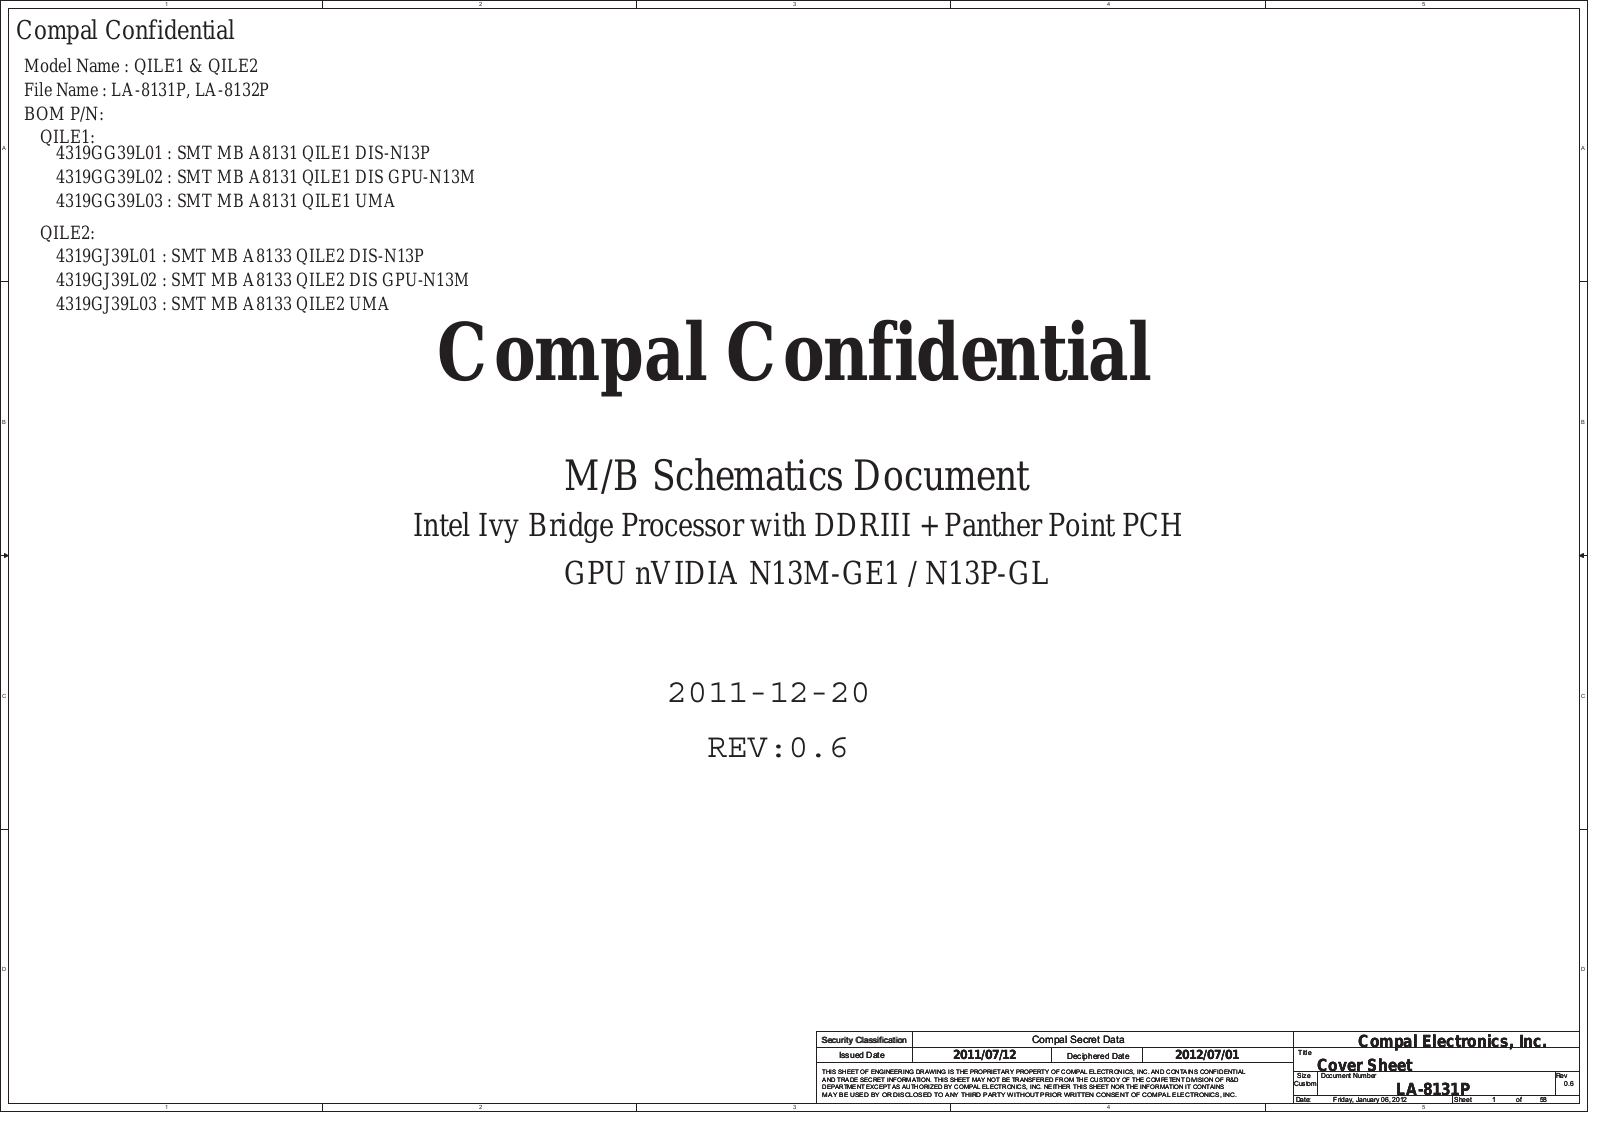 Compal LA-8131P QILE1, LA-8132P QILE2, ThinkPad Edge E430, ThinkPad Edge E530 Schematic